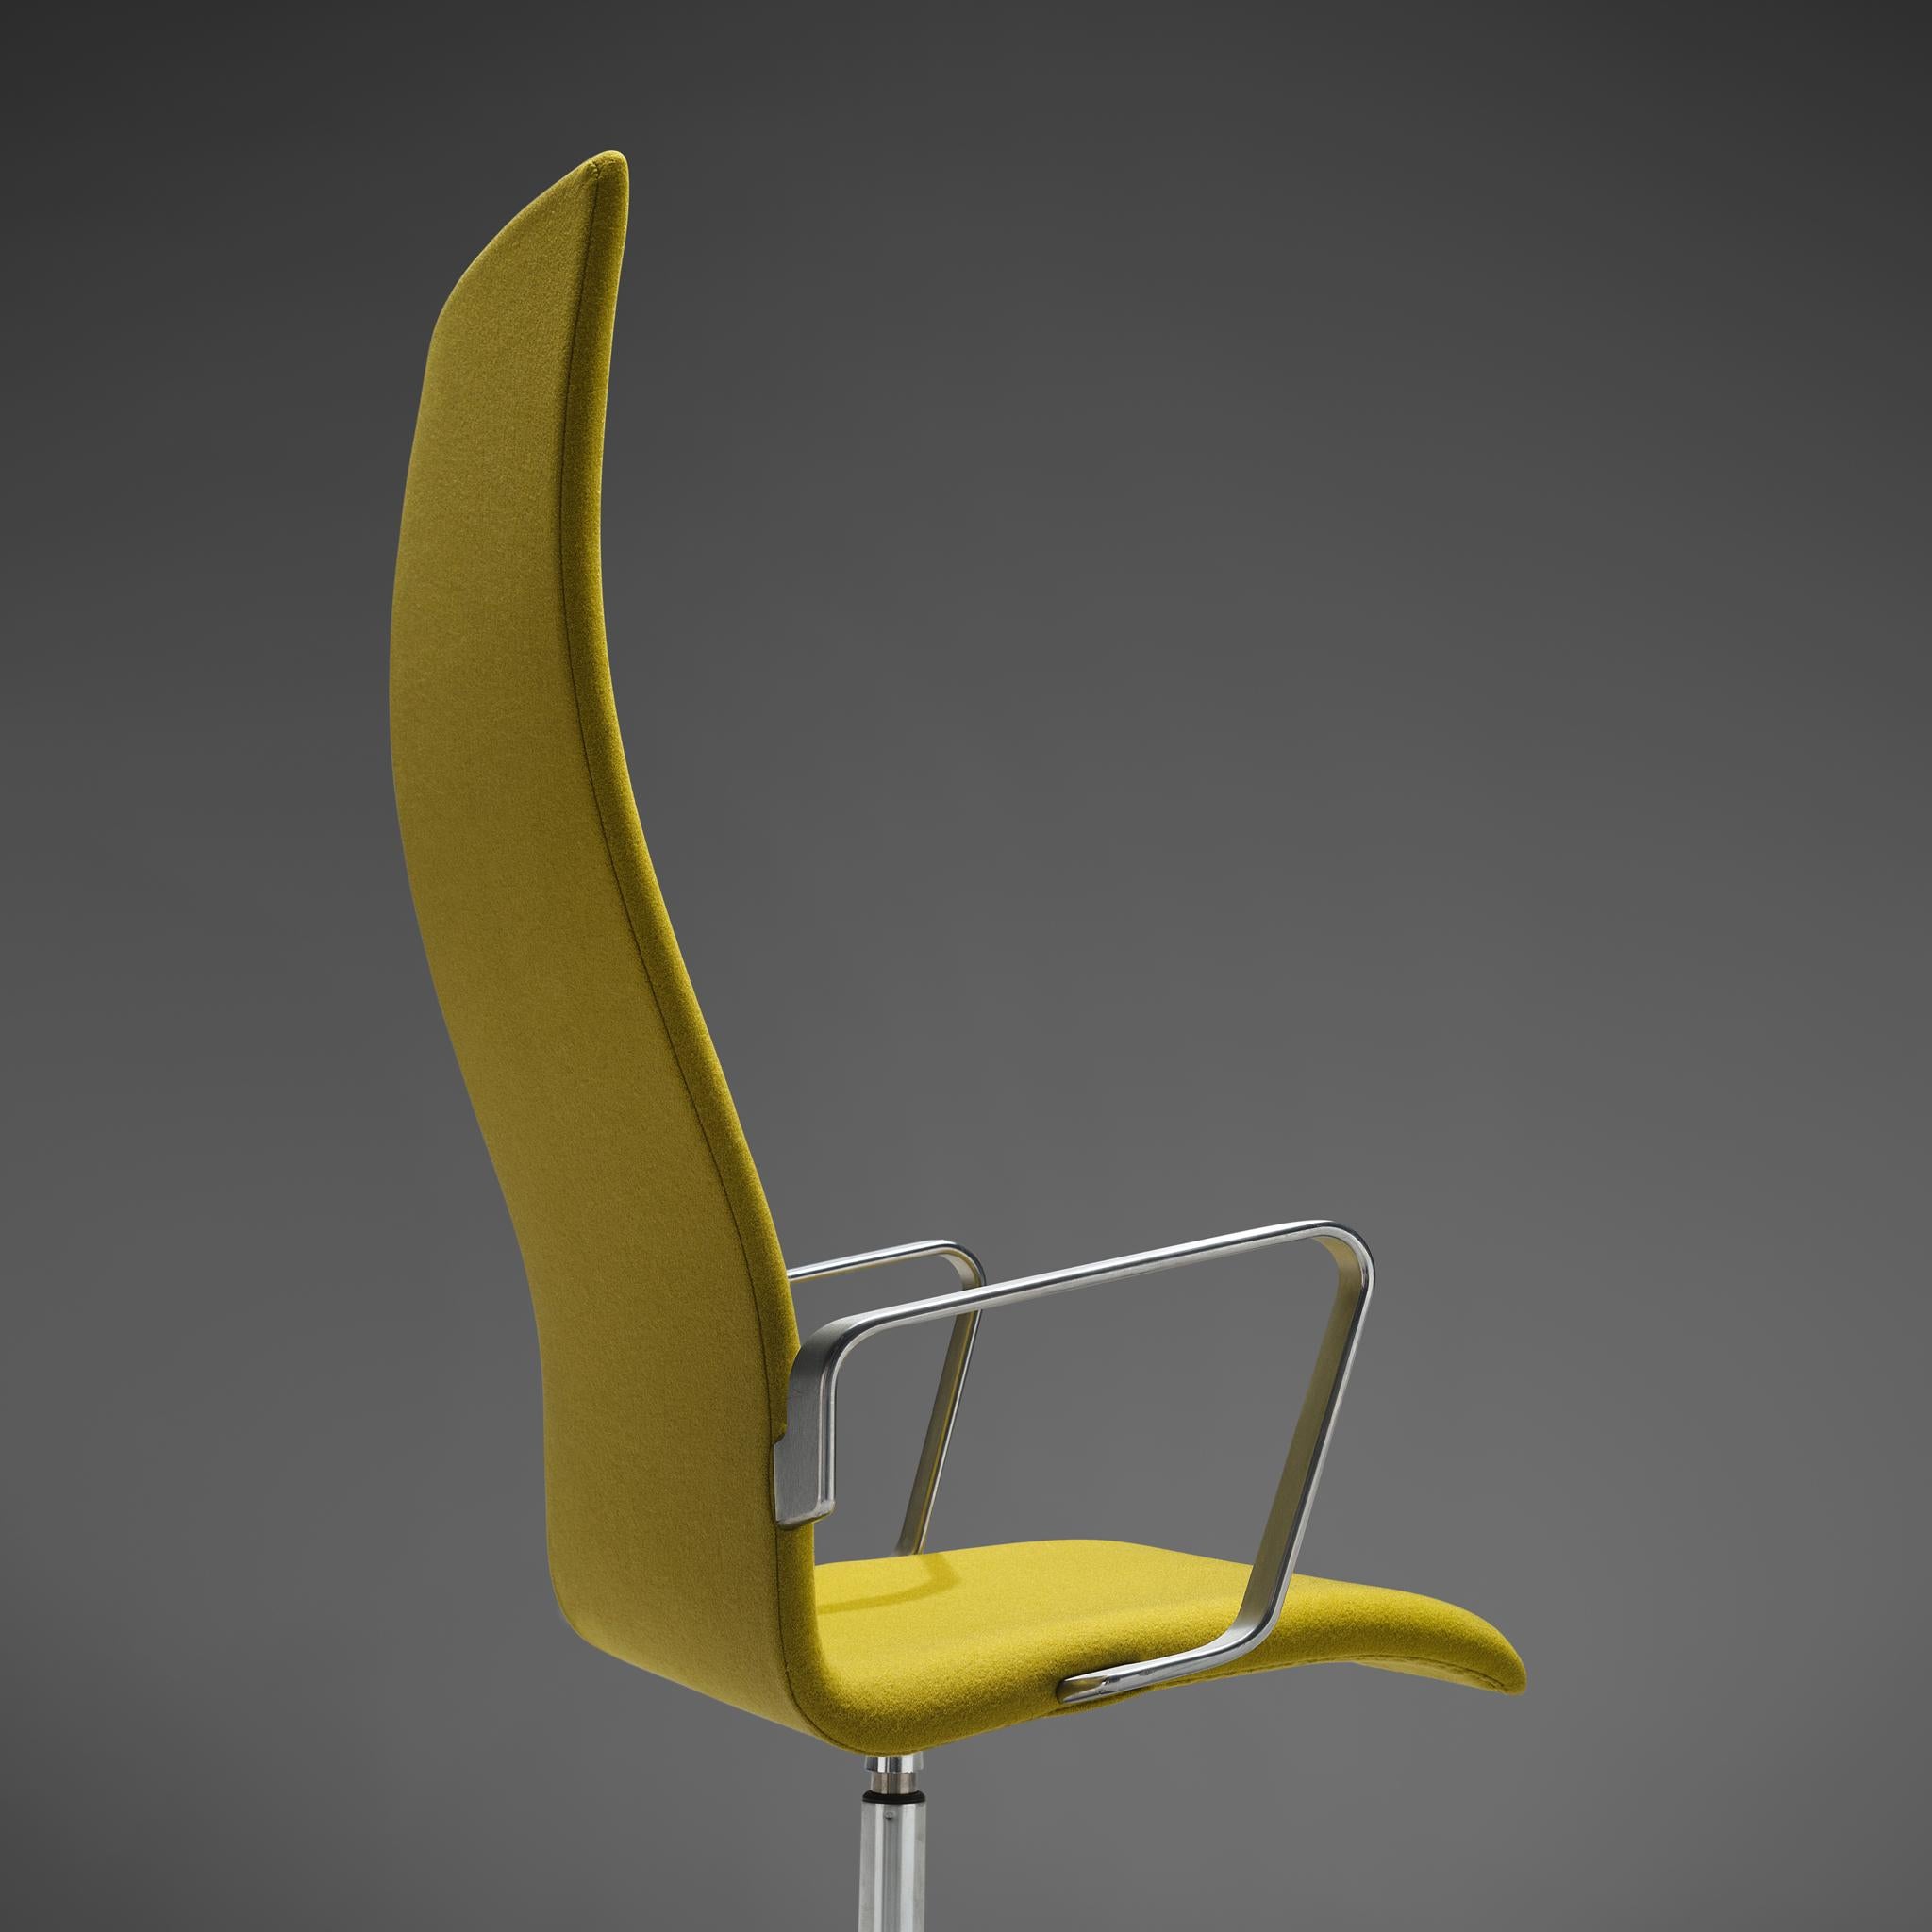 Arne Jacobsen for Fritz Hansen 'Oxford' Desk Chairs  In Good Condition For Sale In Waalwijk, NL